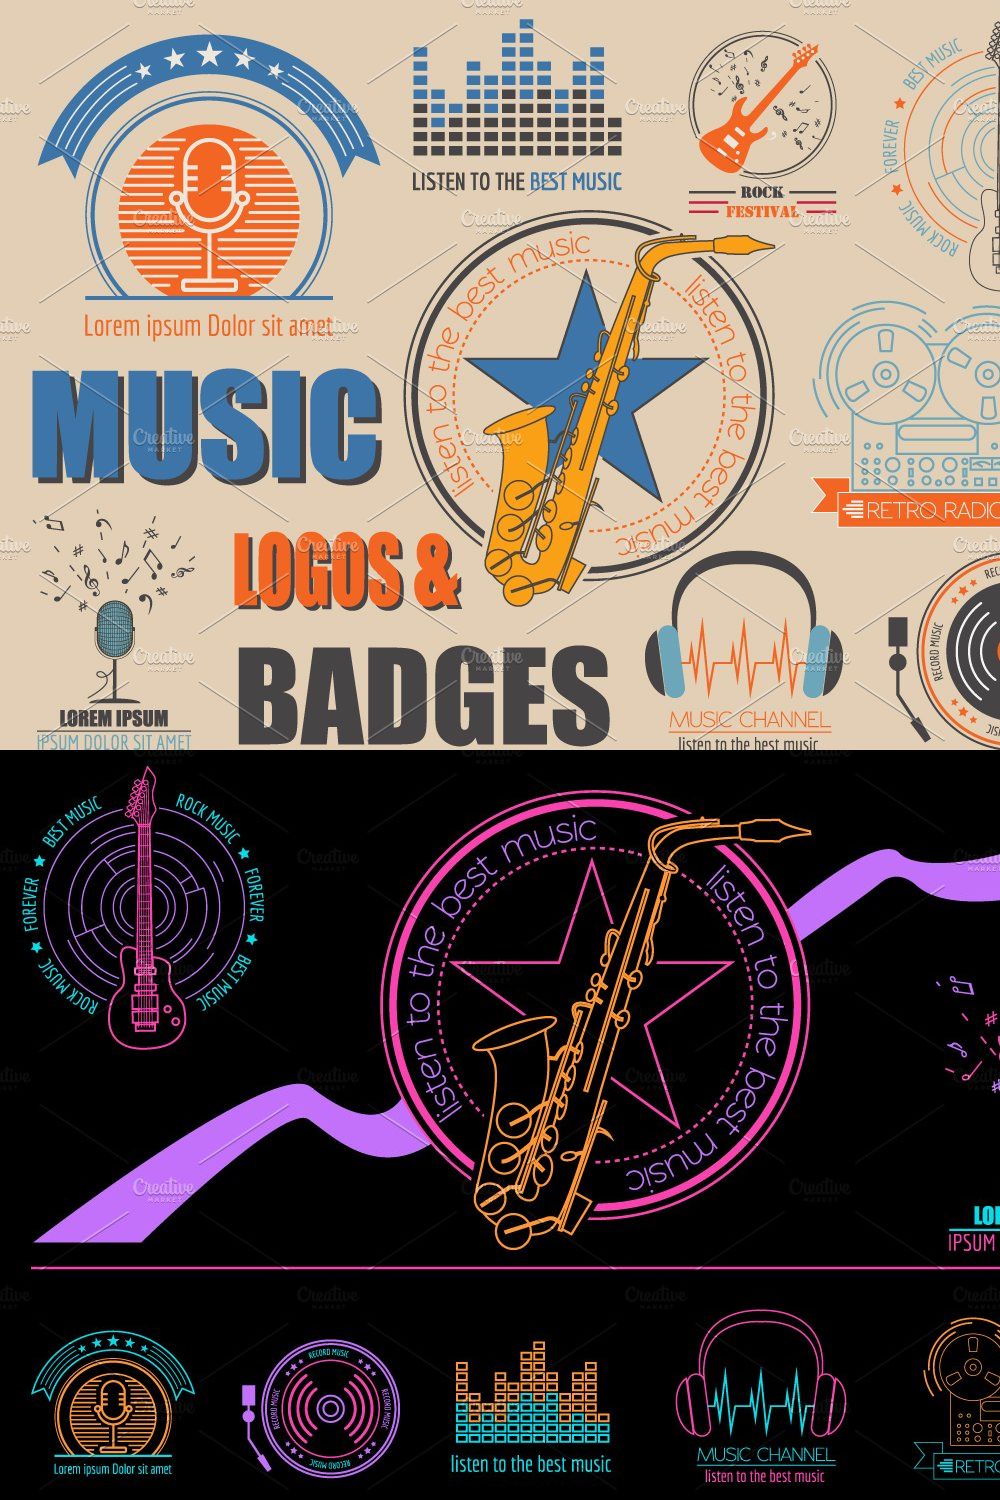 Music logos & badges pinterest preview image.